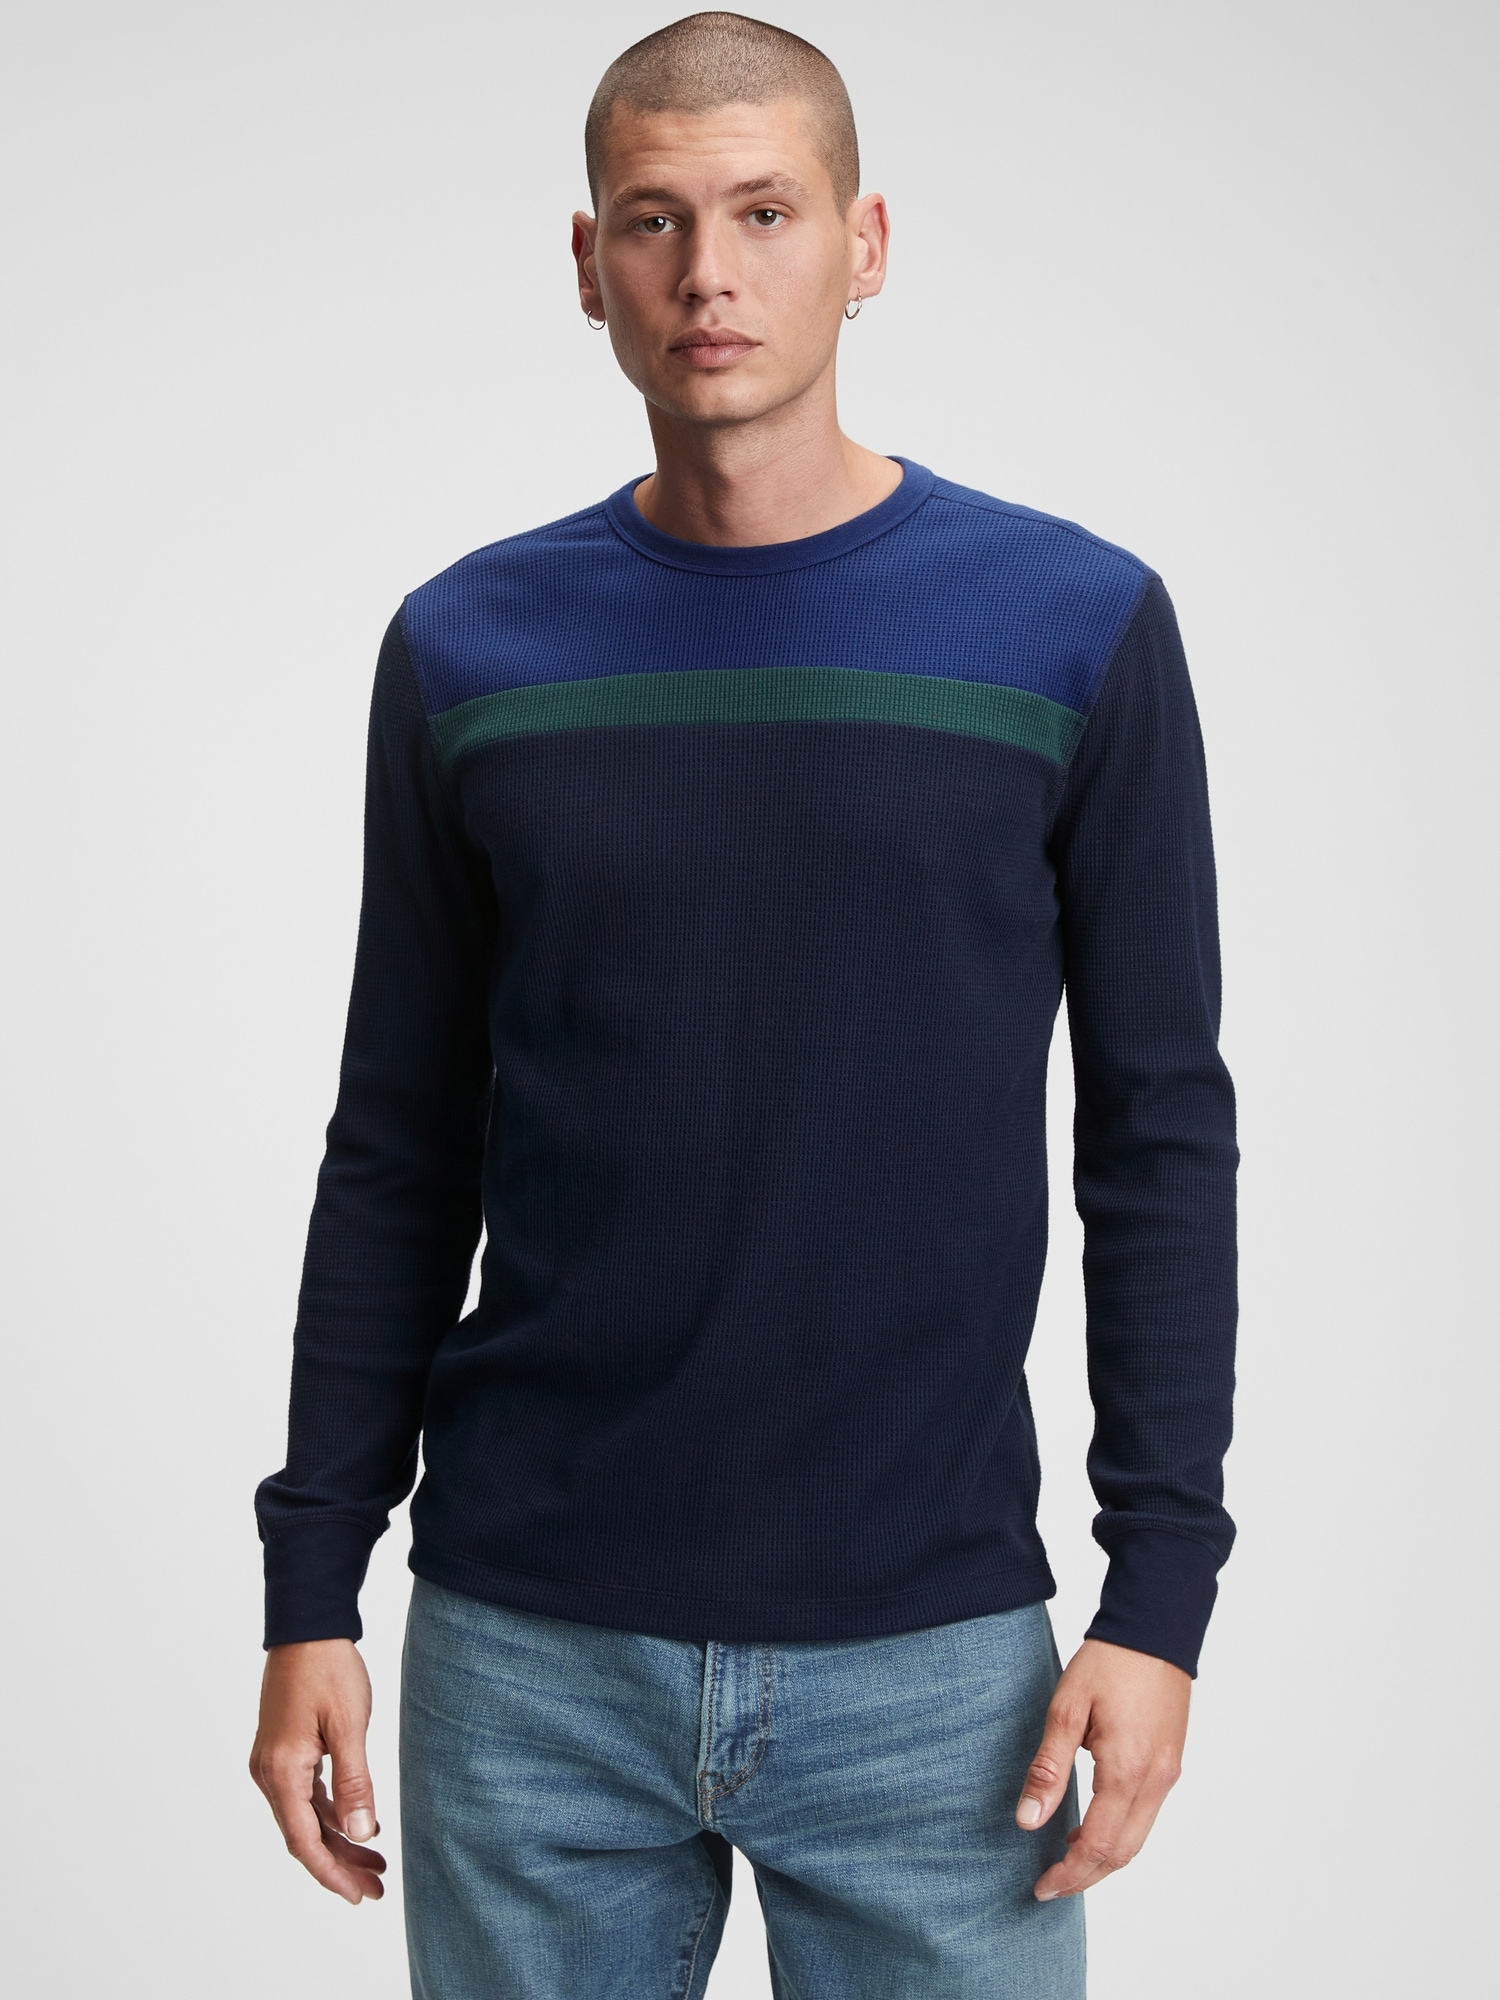 Colorblock Waffle-Knit T-Shirt | Gap Factory